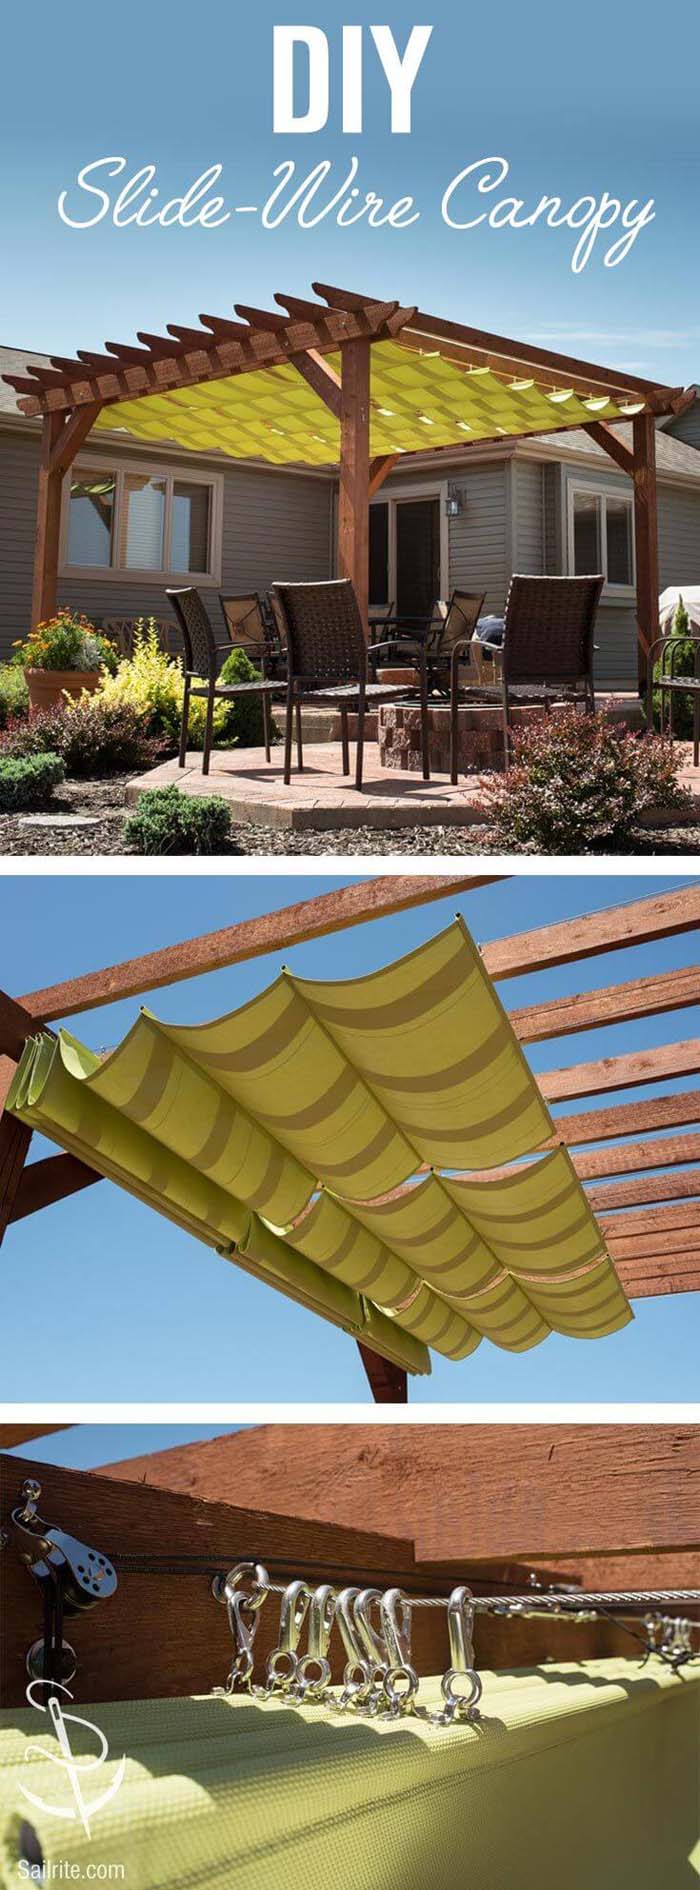 Backyard Pergola with Sliding Shade Canopy #diy #backyard #garden #projects #decorhomeideas